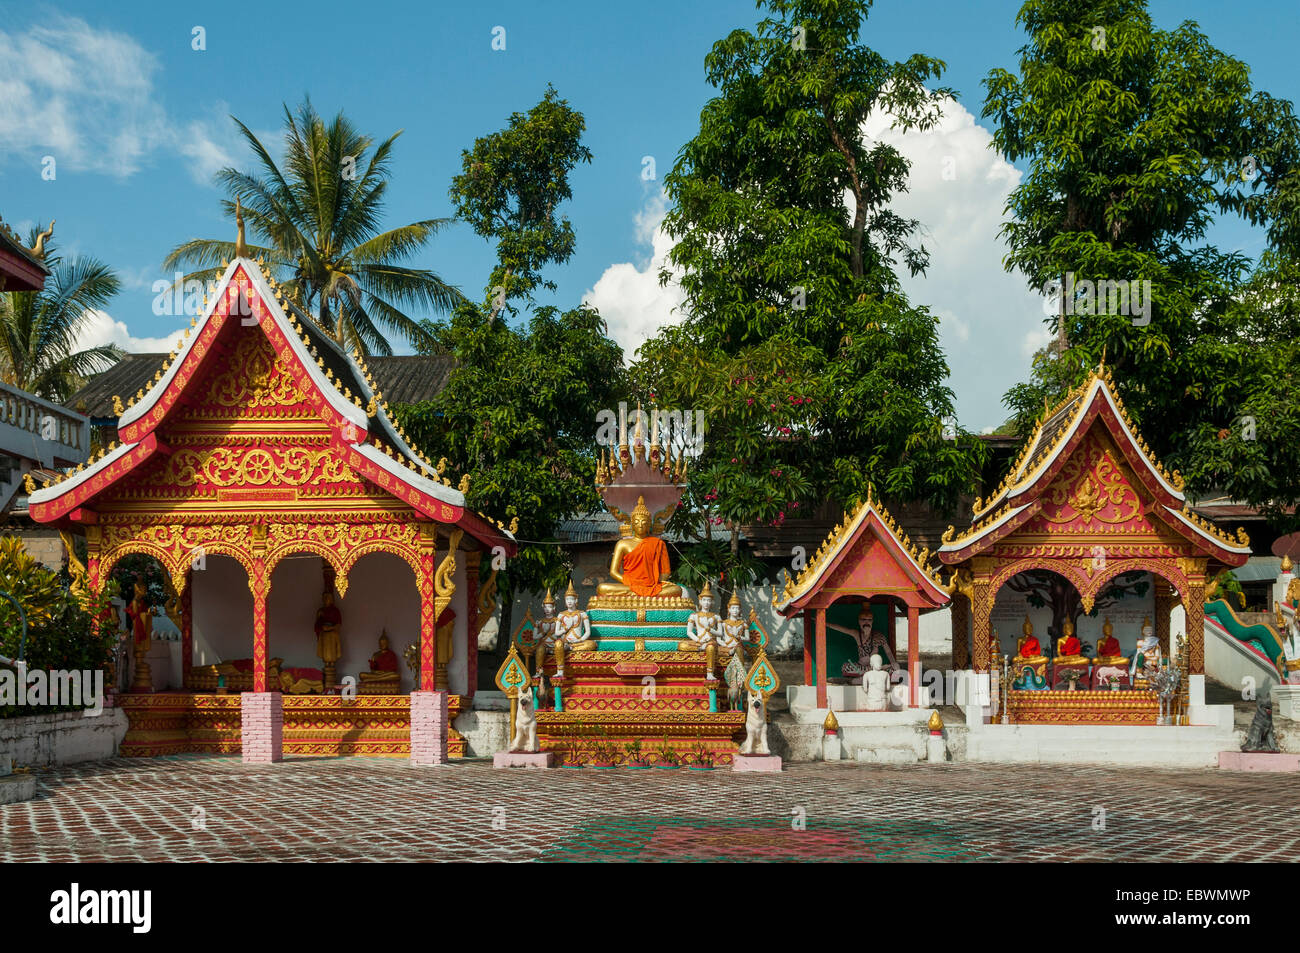 Temple at Sang Ha, Laos Stock Photo - Alamy